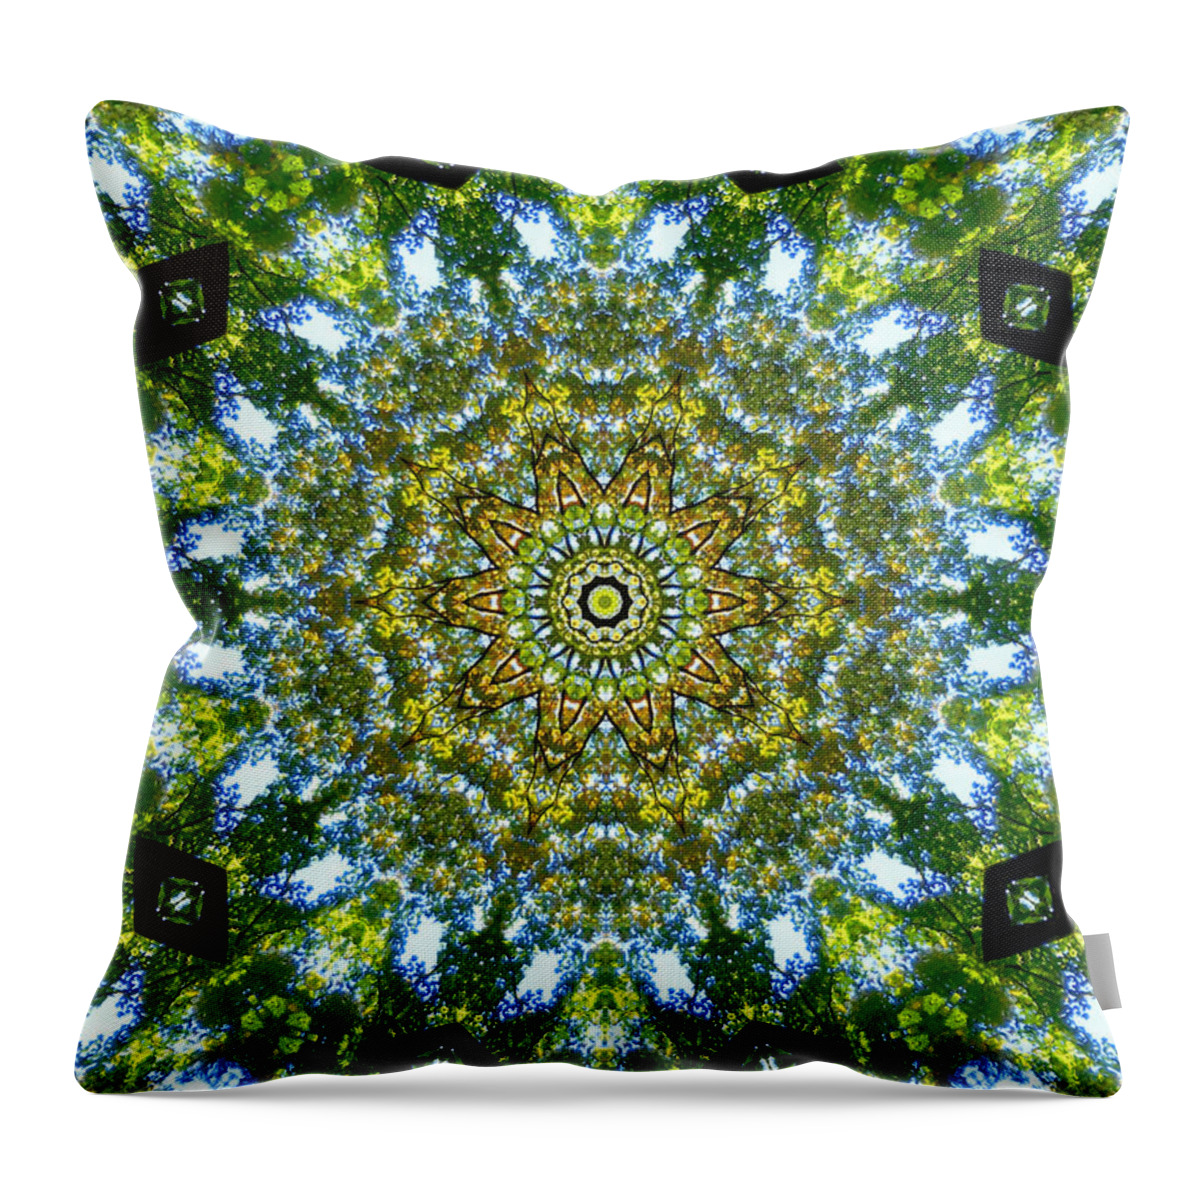 Flower Mandala Throw Pillow featuring the painting Flower mandala 31 by Jeelan Clark